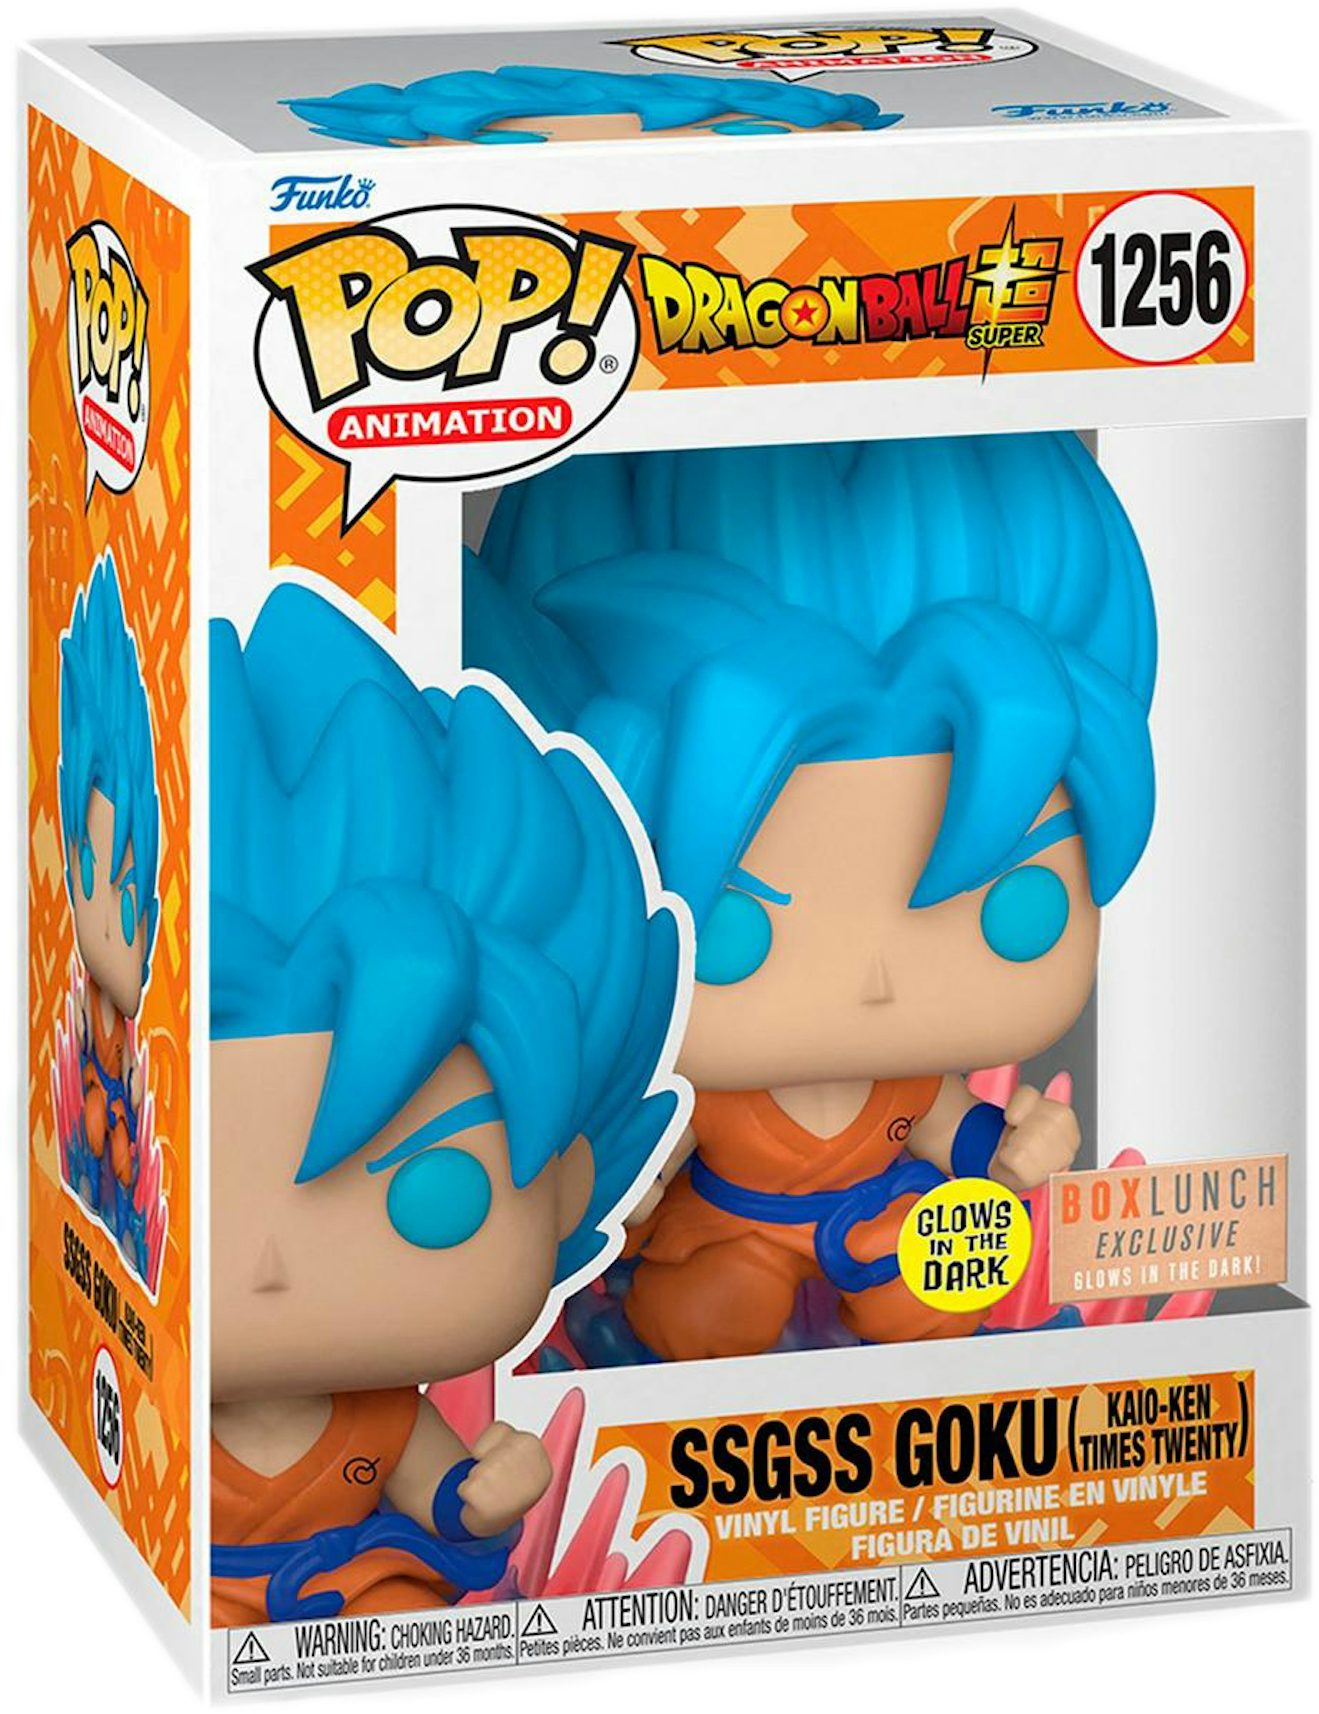 Goku Ultra Instinct Kamehameha Funko POP - 2022 NYCC Exclusive Con Sticker